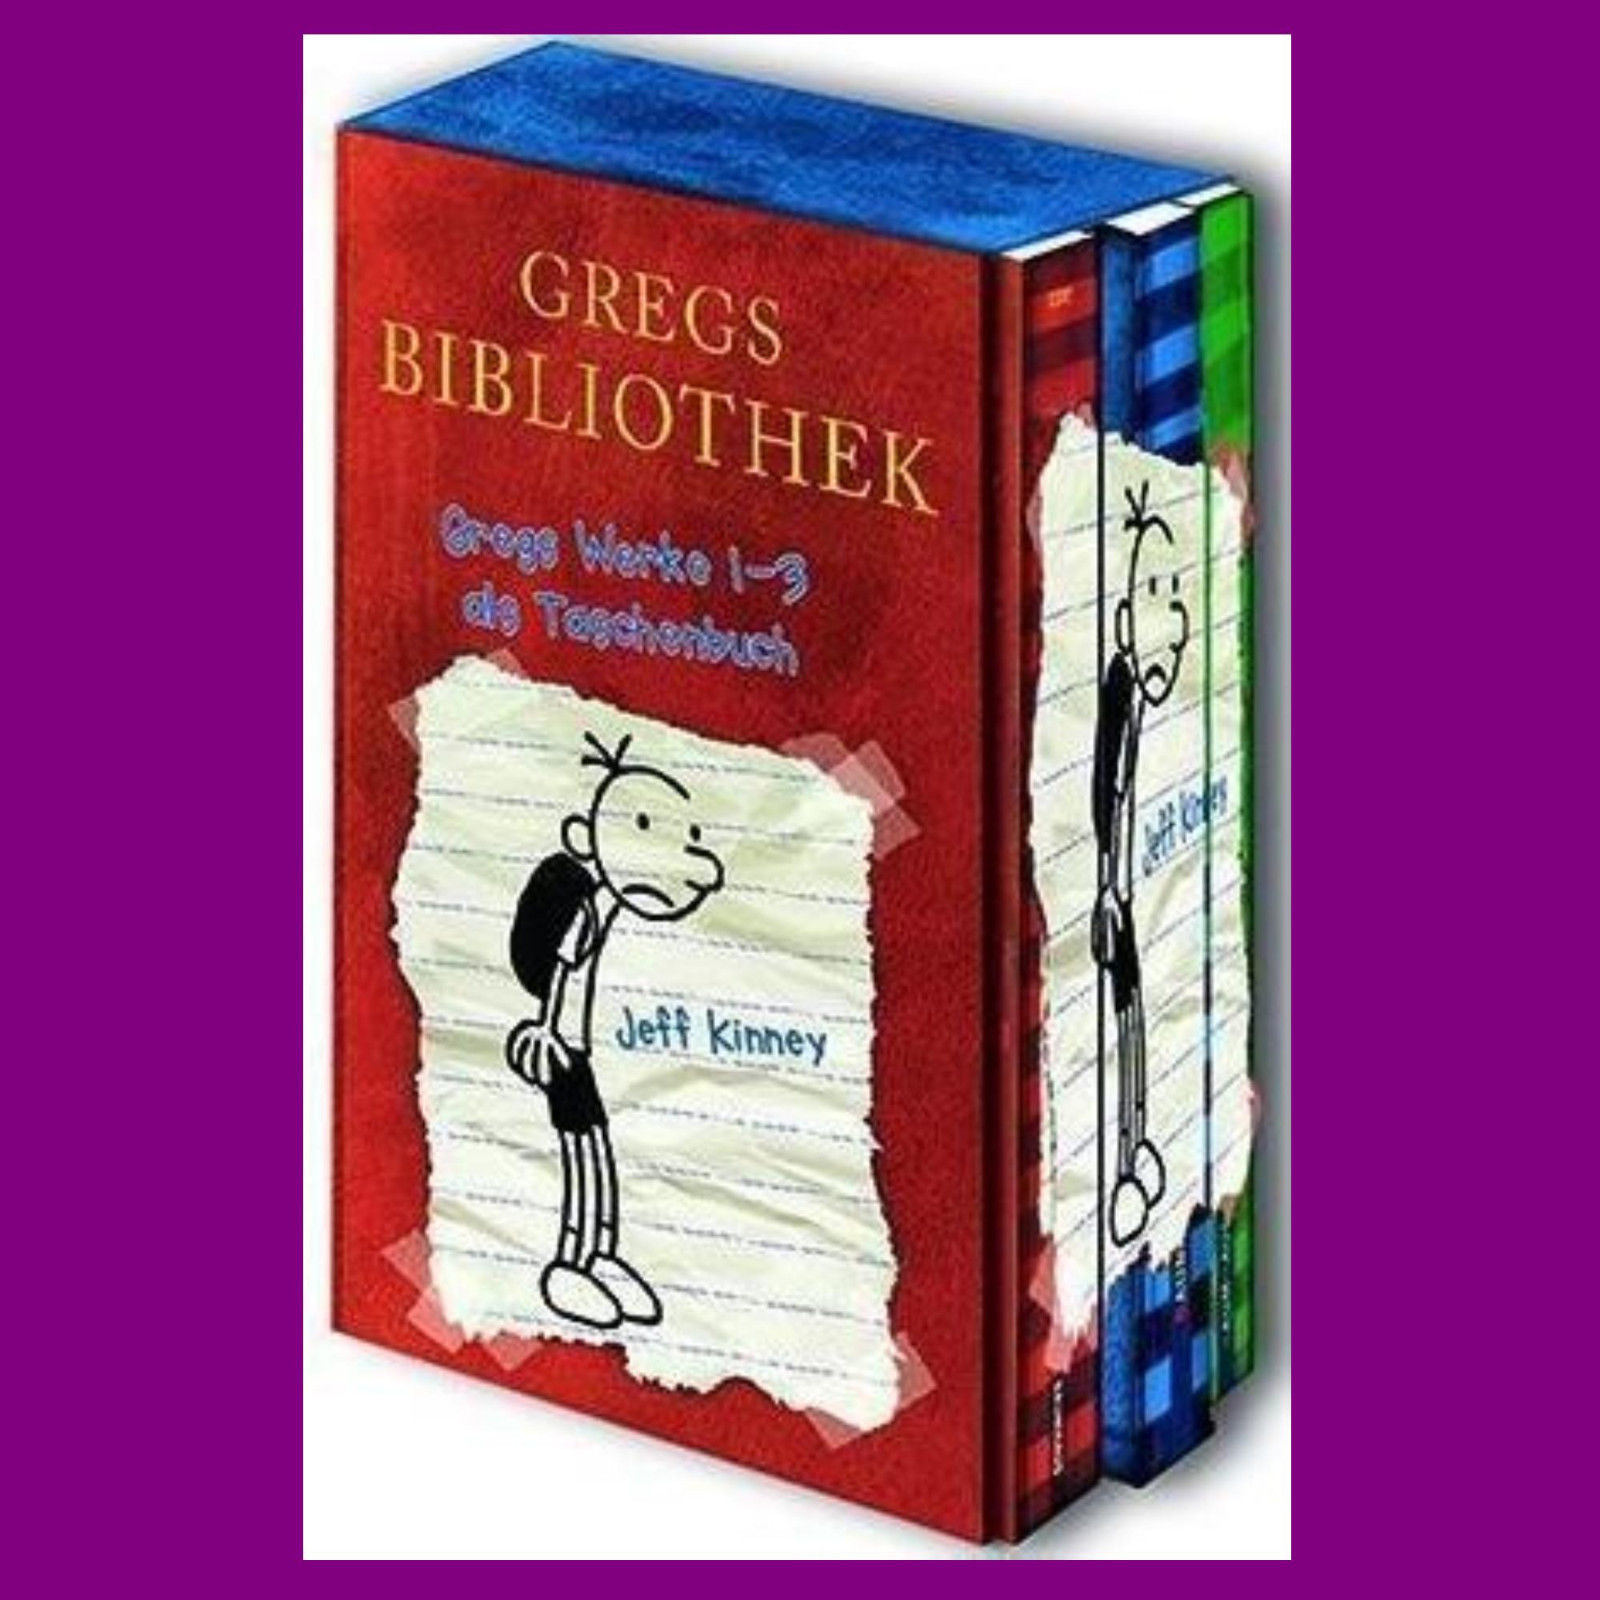 Jeff Kinney - Gregs Tagebuch Band 1-3 - Band 1+2+3 im Schuber - Neu - Buch - OVP